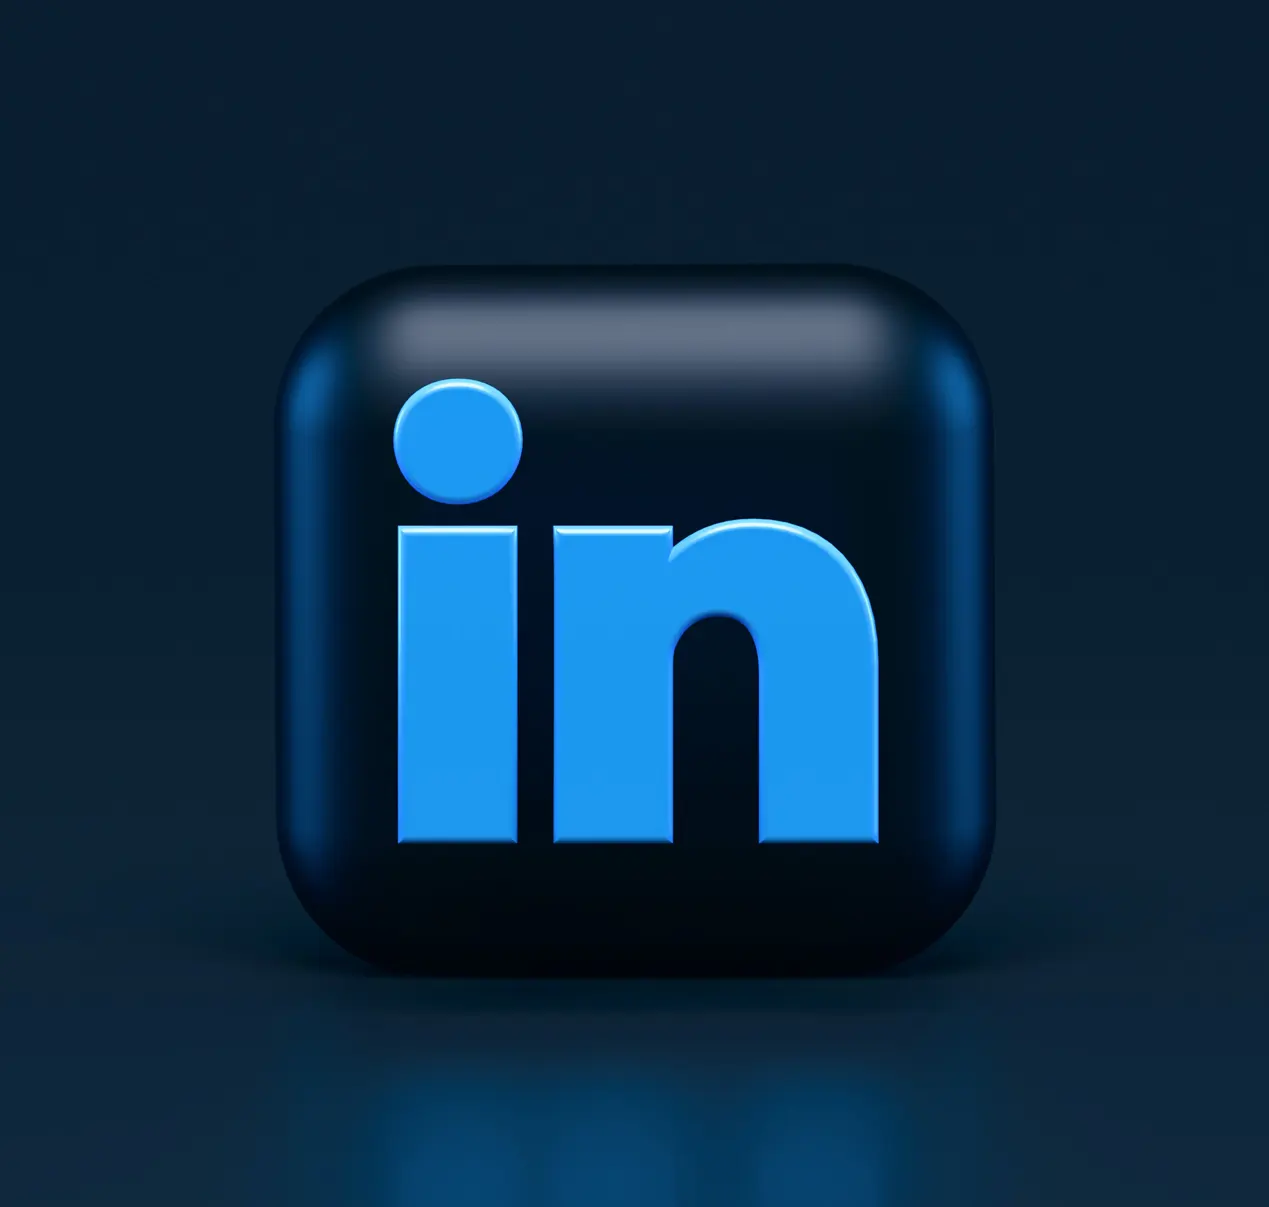 LinkedIn Profile Writing Services